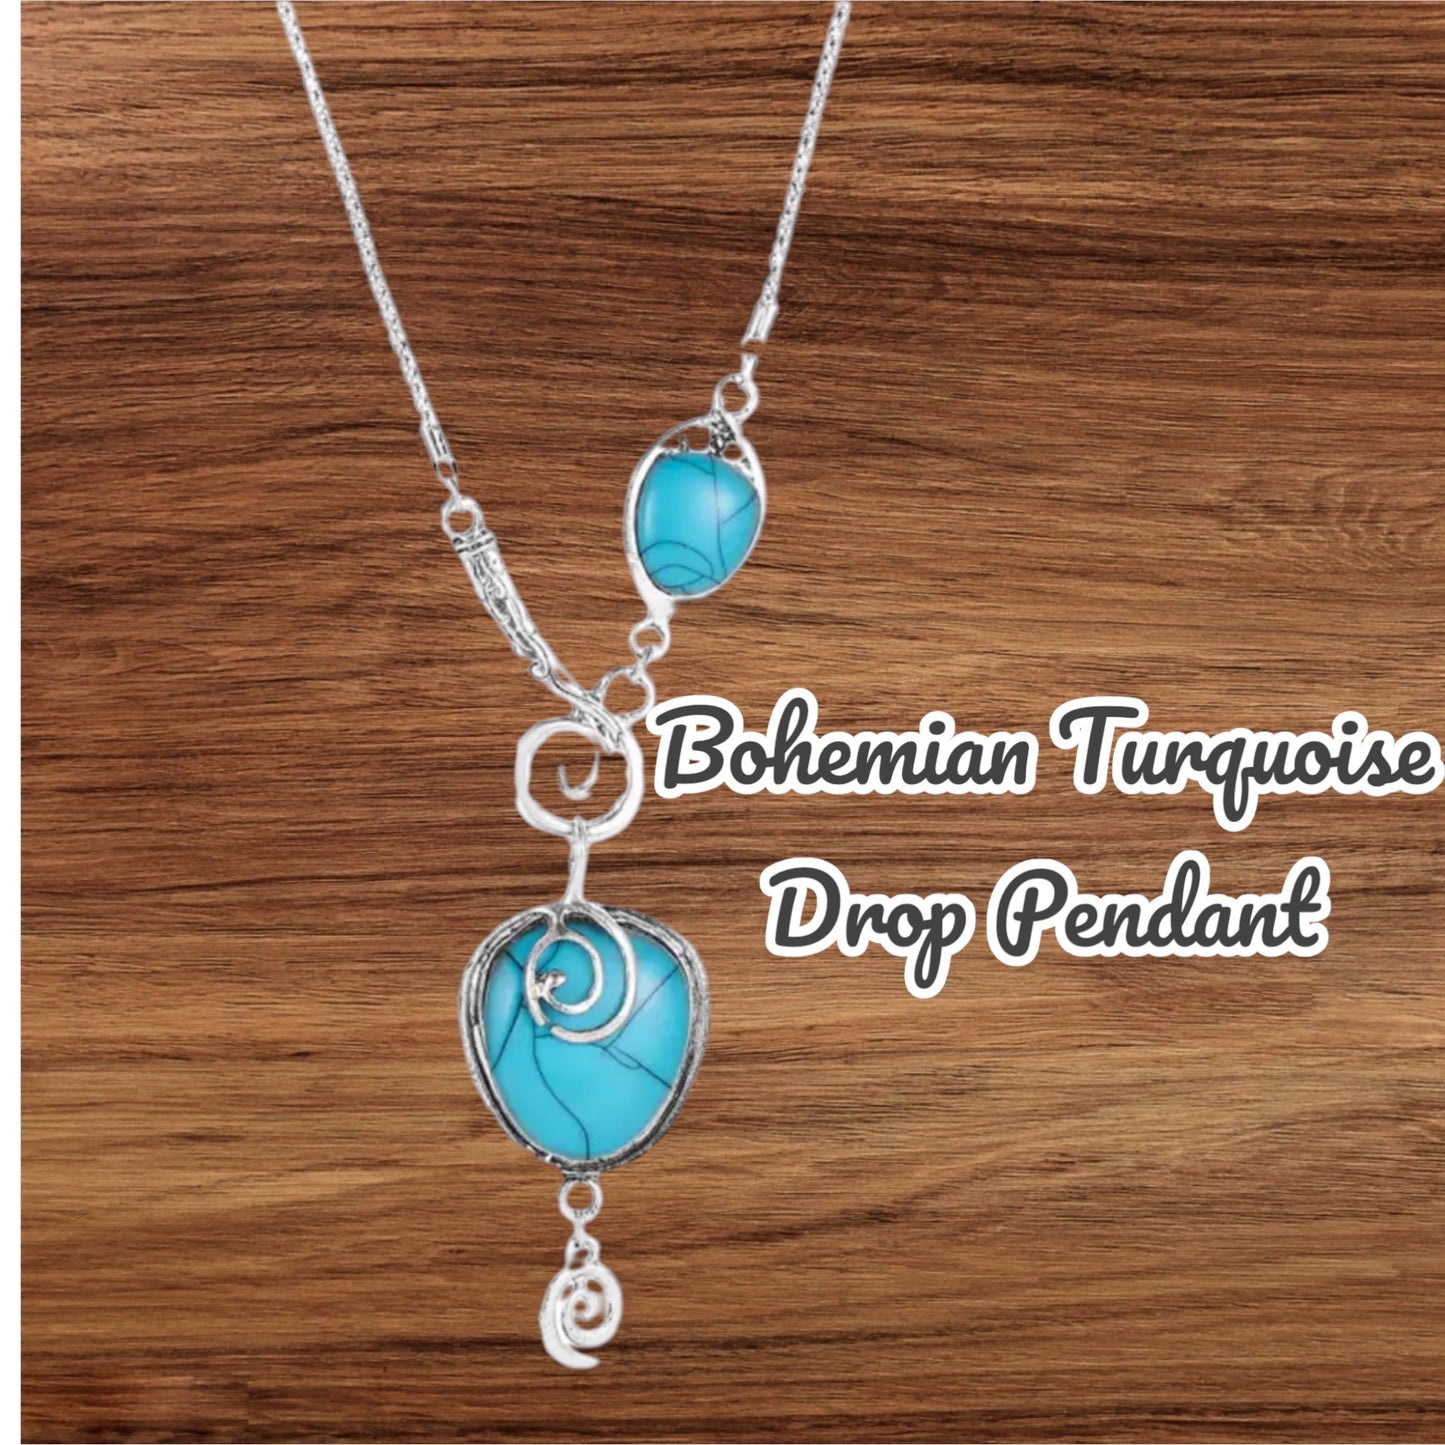 Bohemian Pendant Necklace Teardrop Design with Turquoise stones